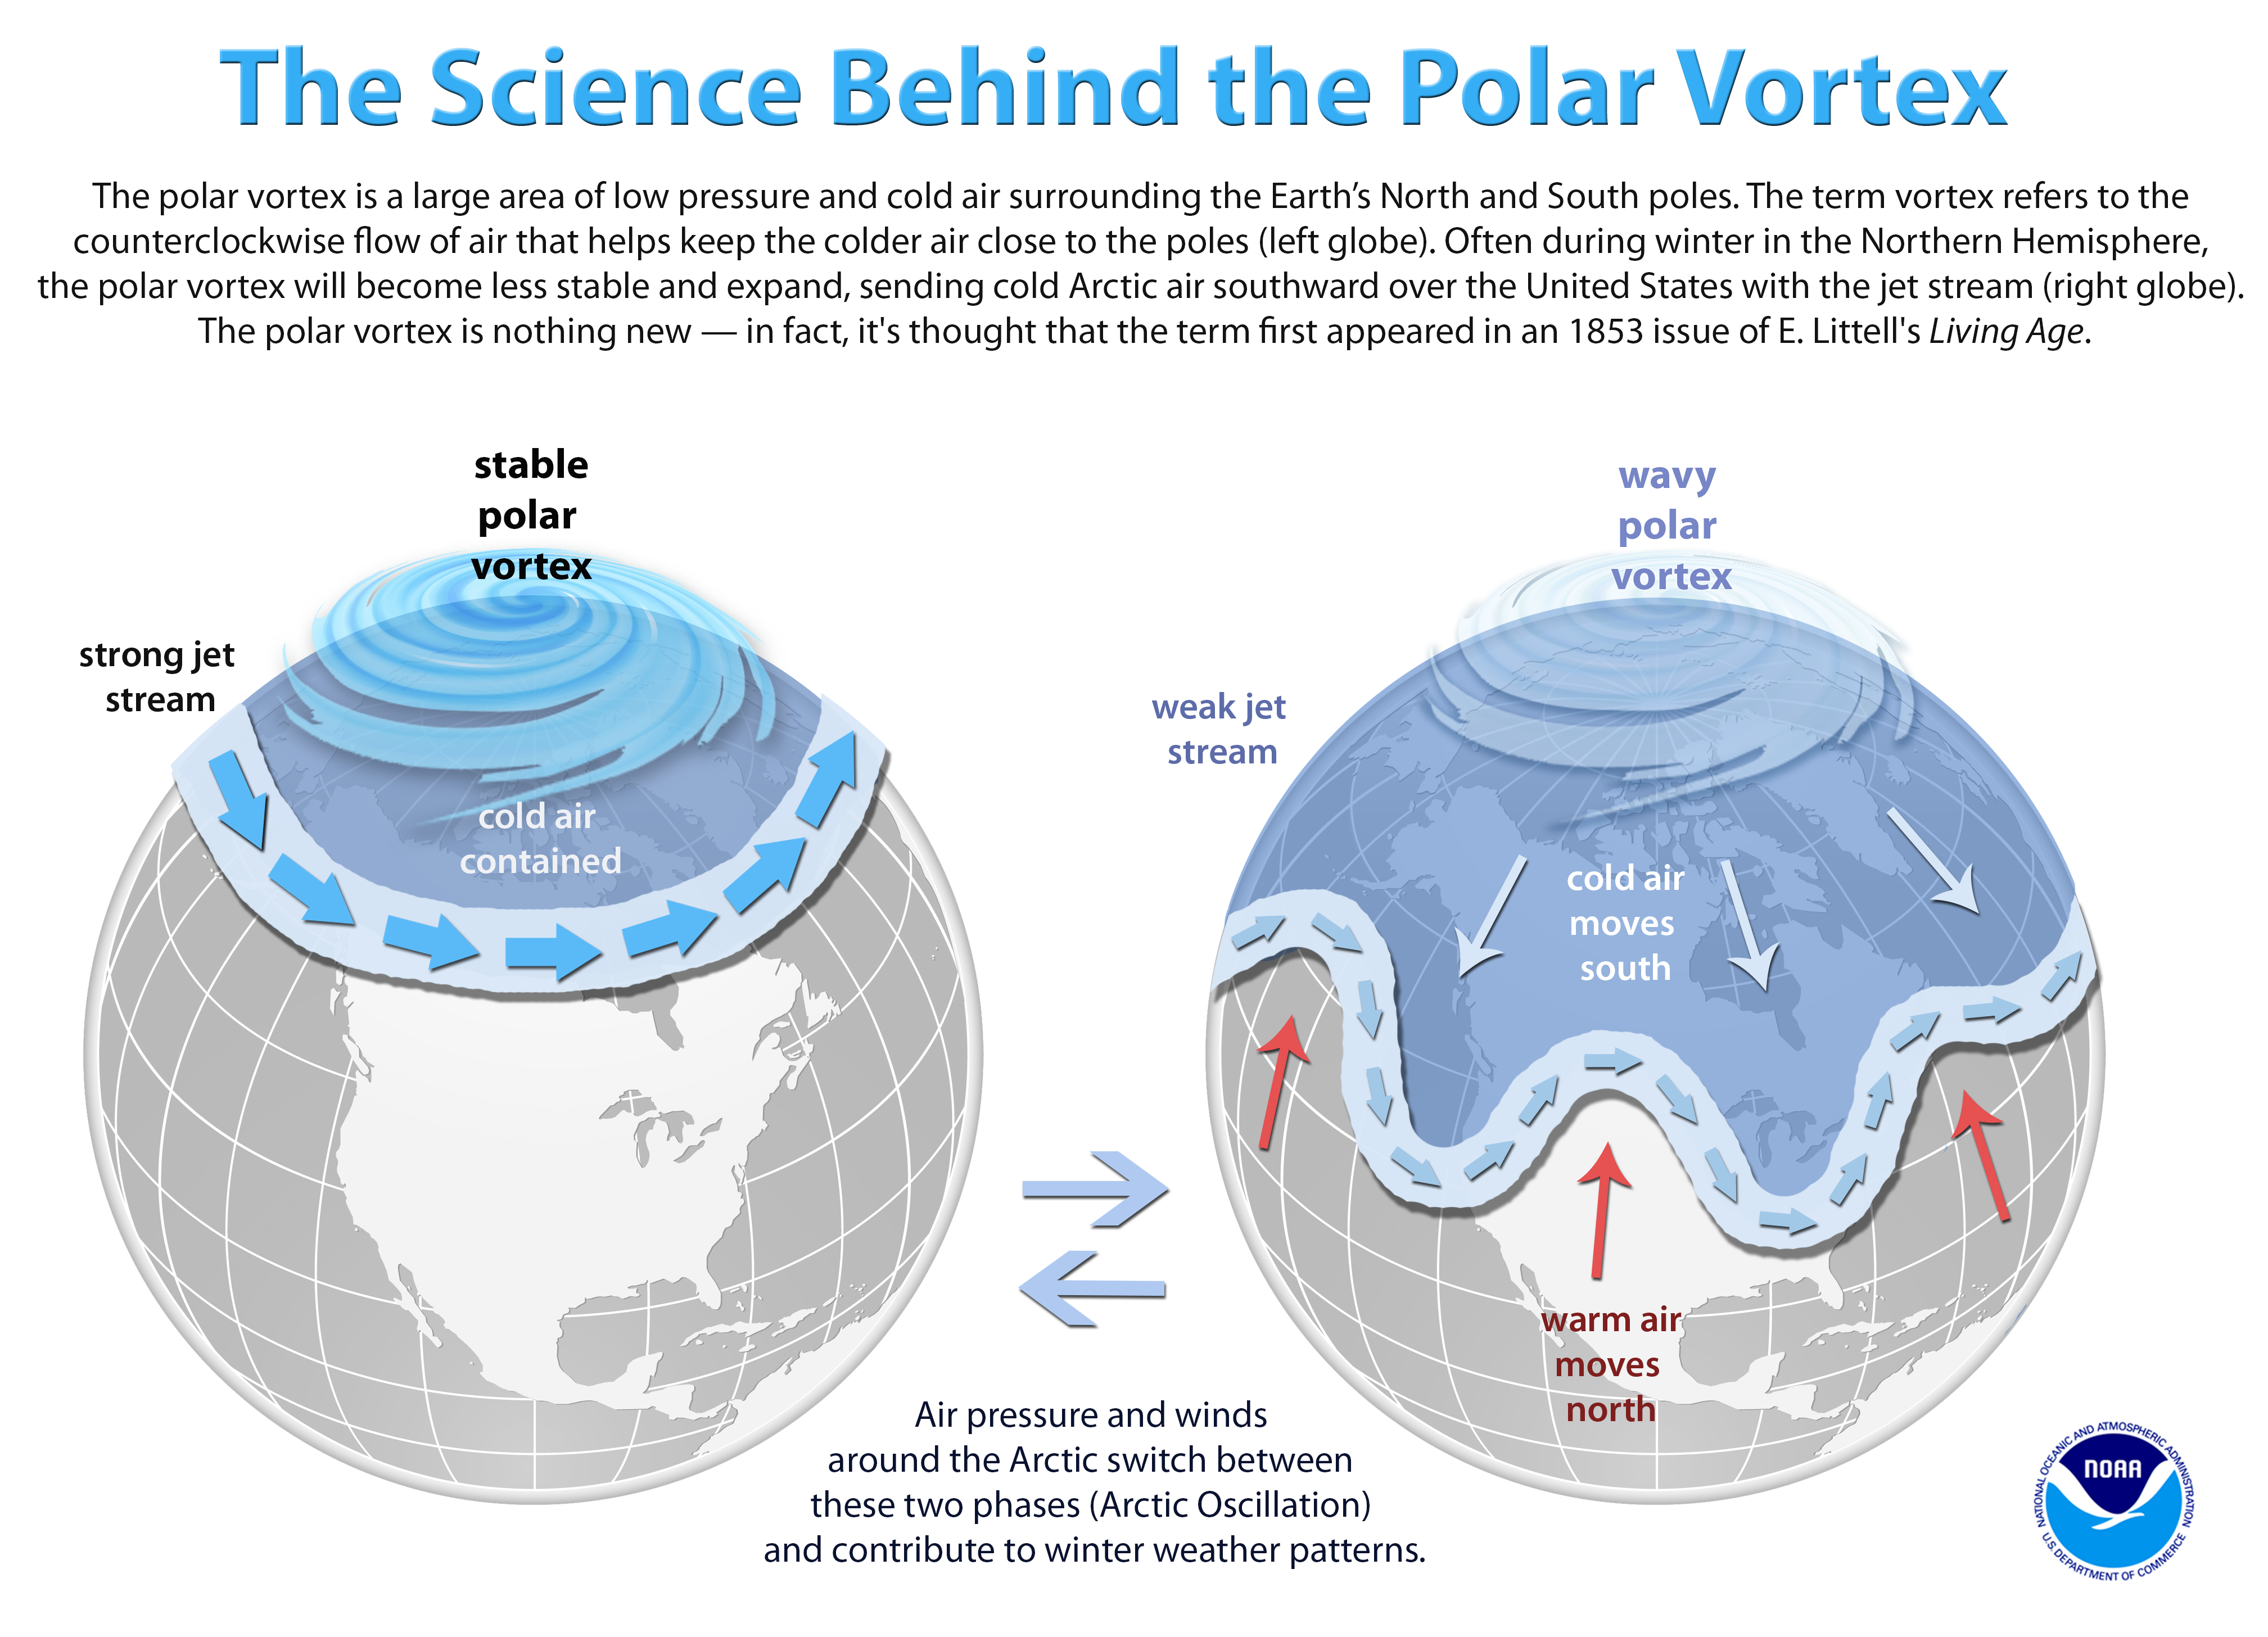 The science behind the polar vortex